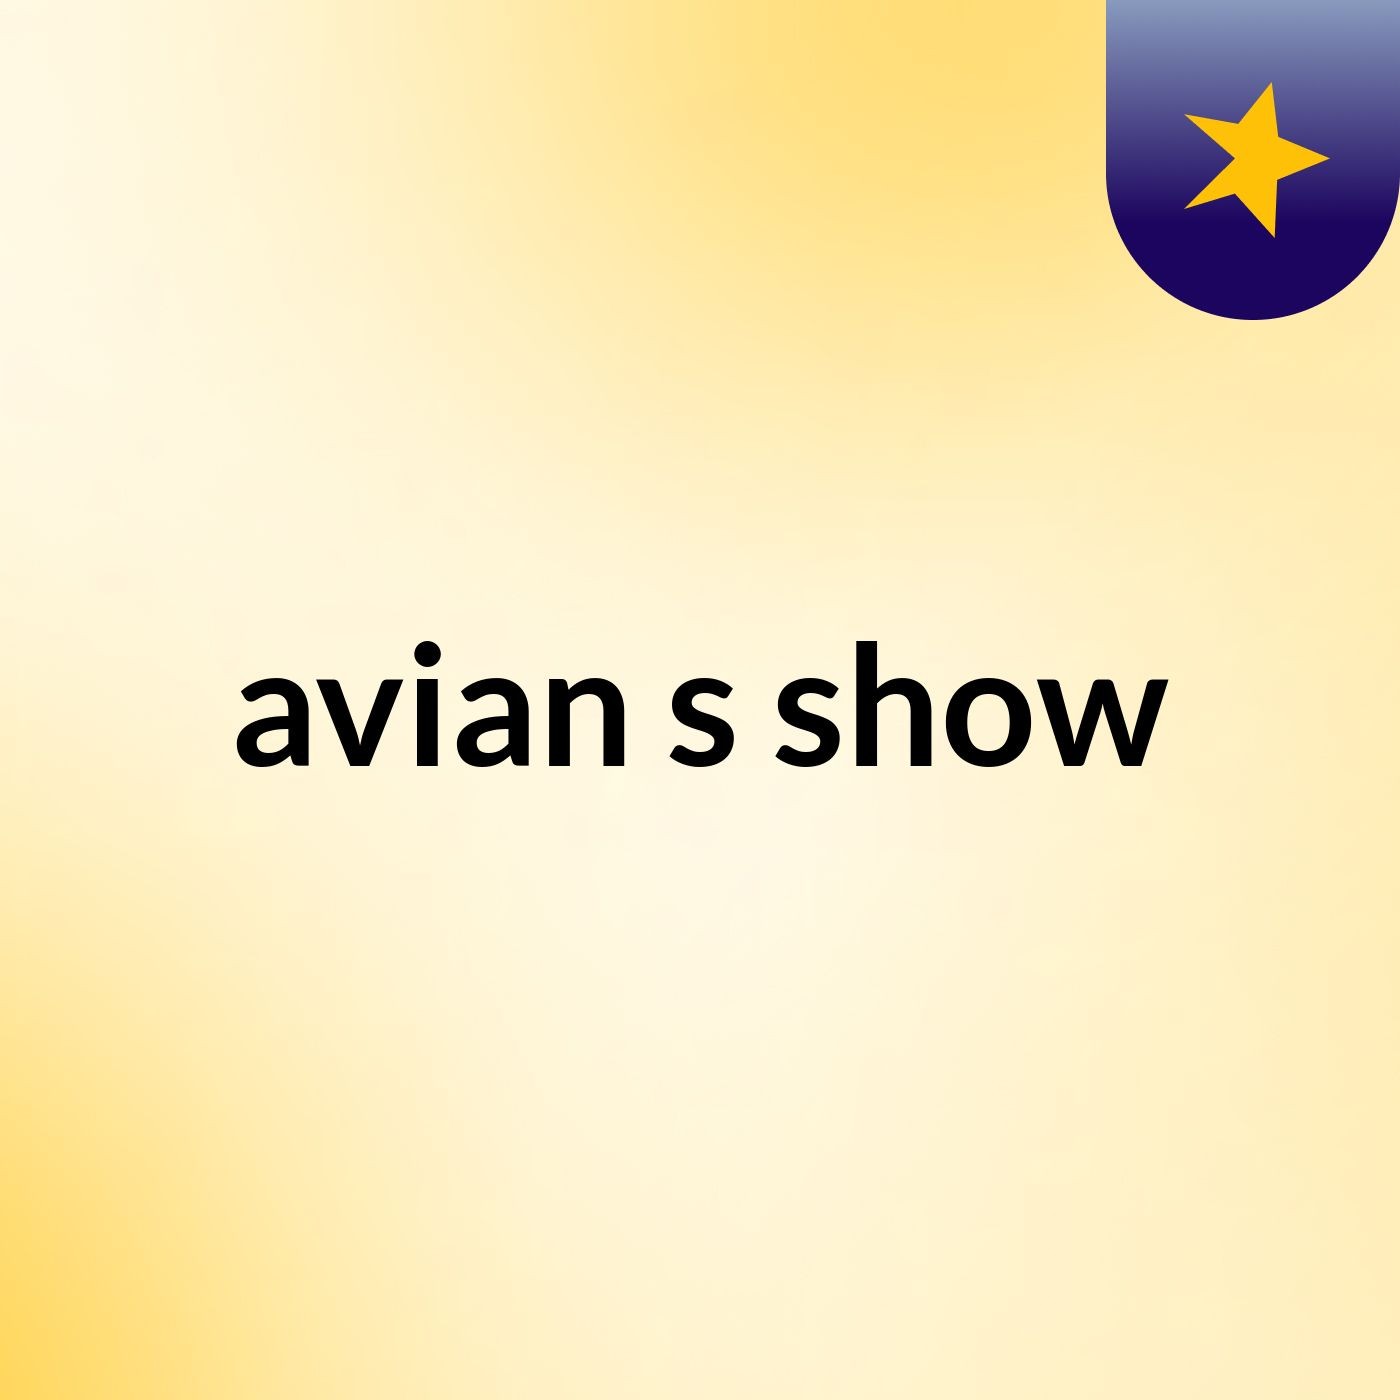 avian's show